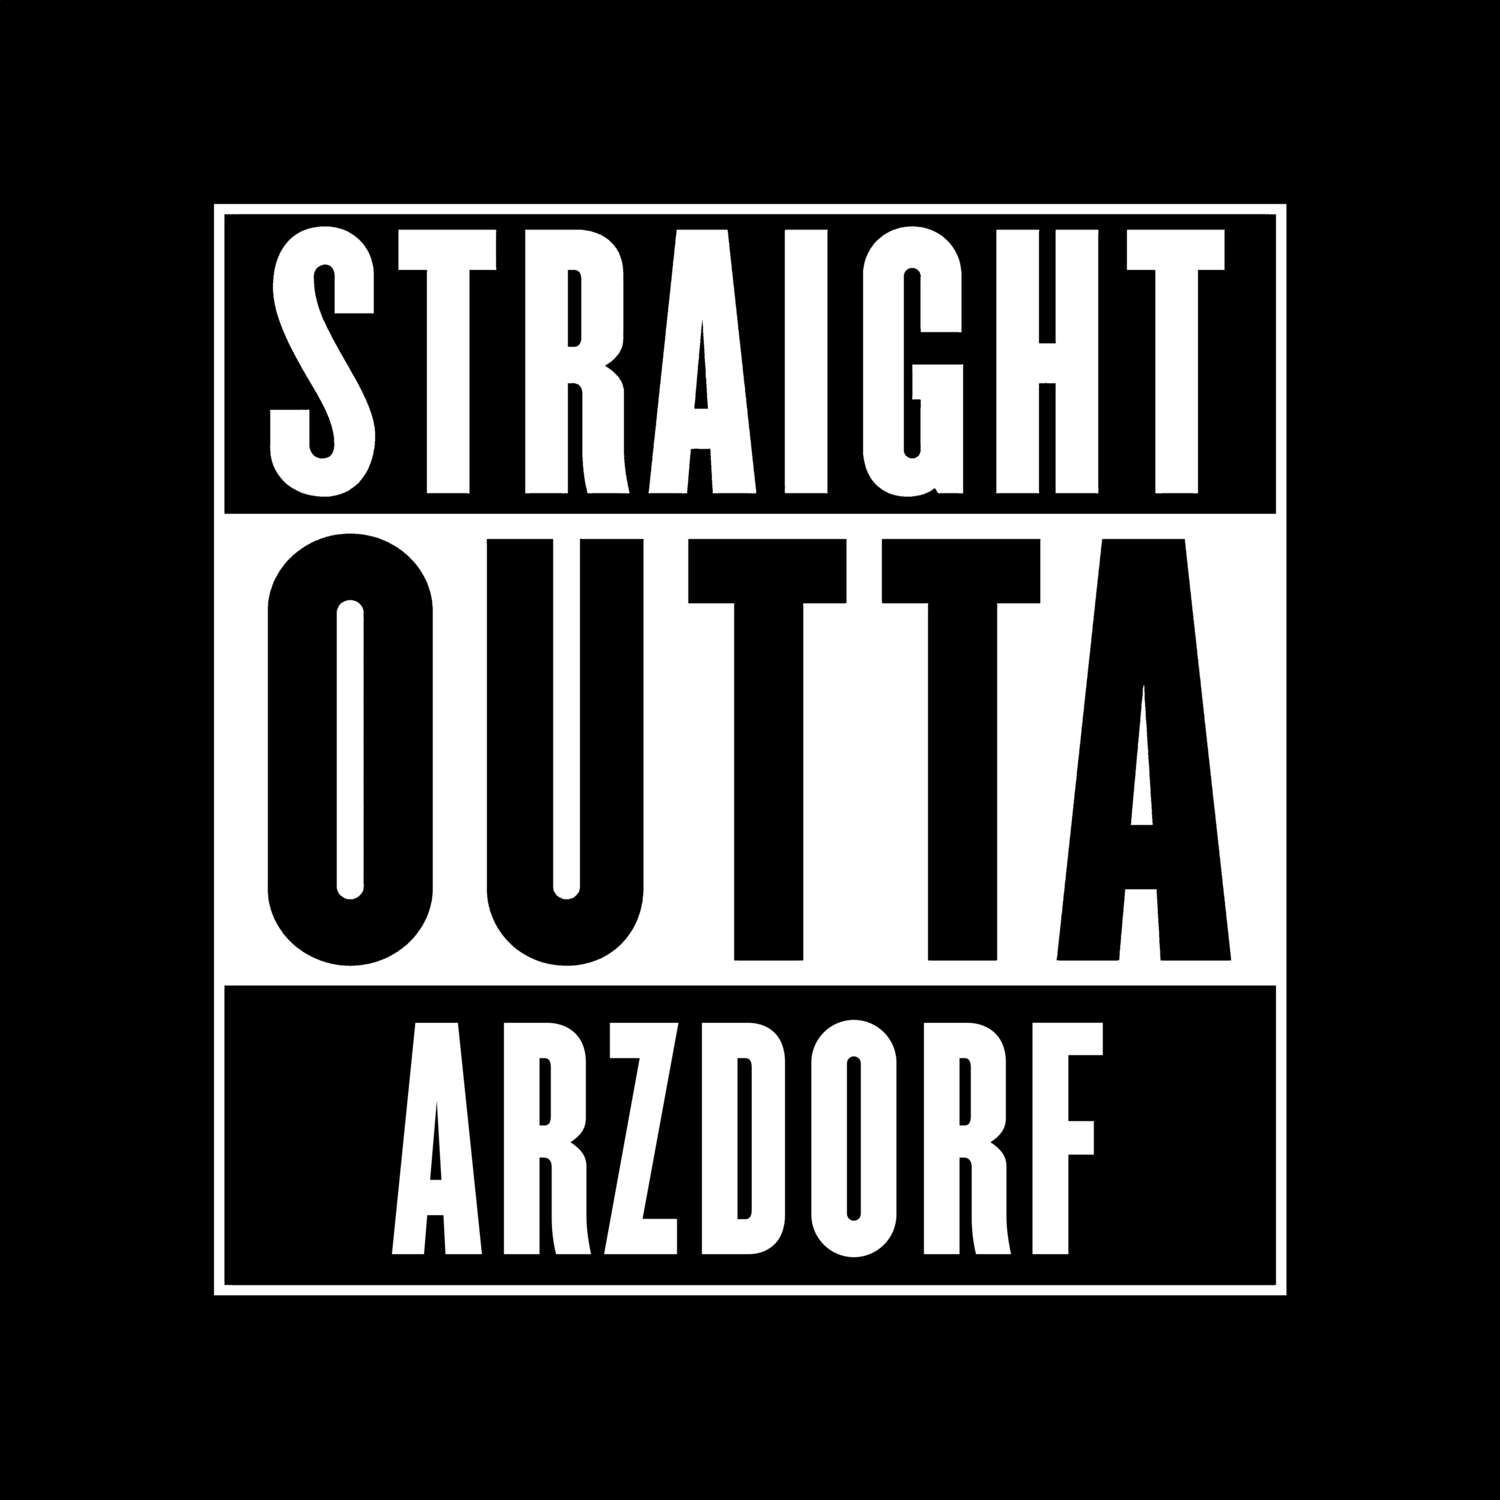 Arzdorf T-Shirt »Straight Outta«